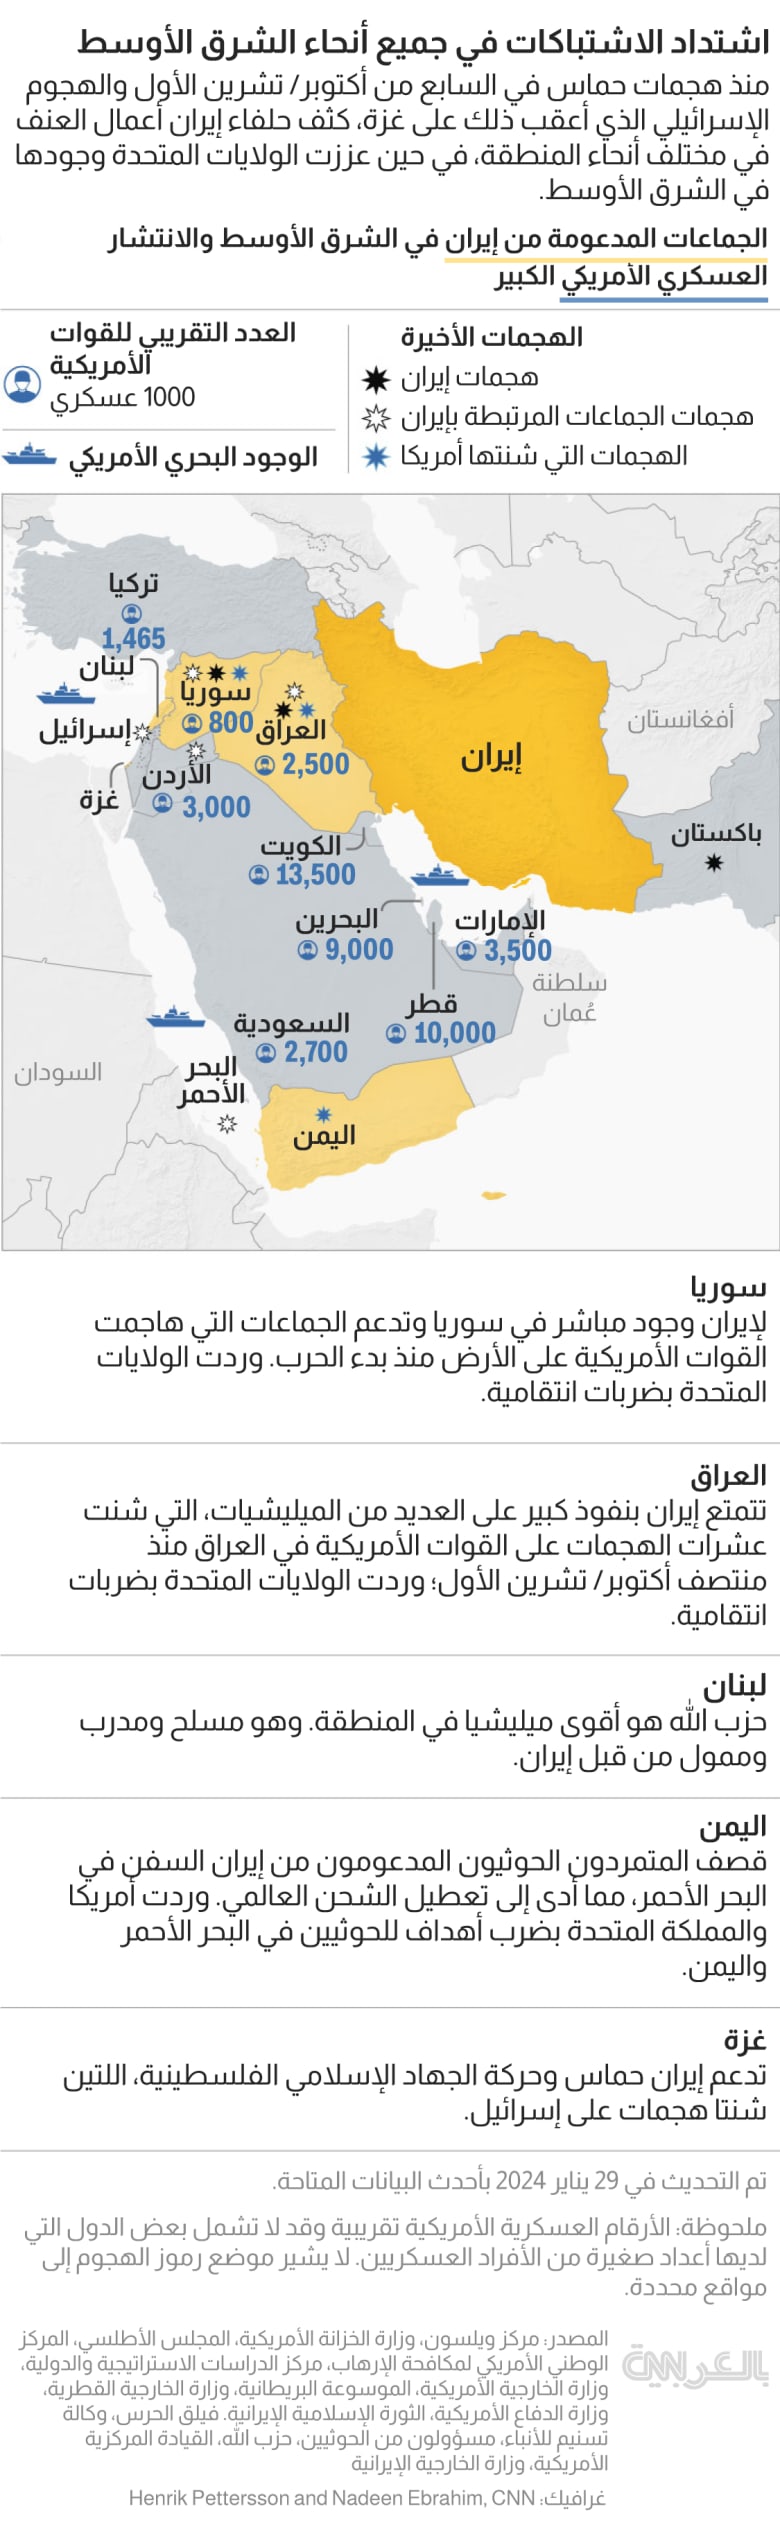 upt-iran-backed-map-29-jan